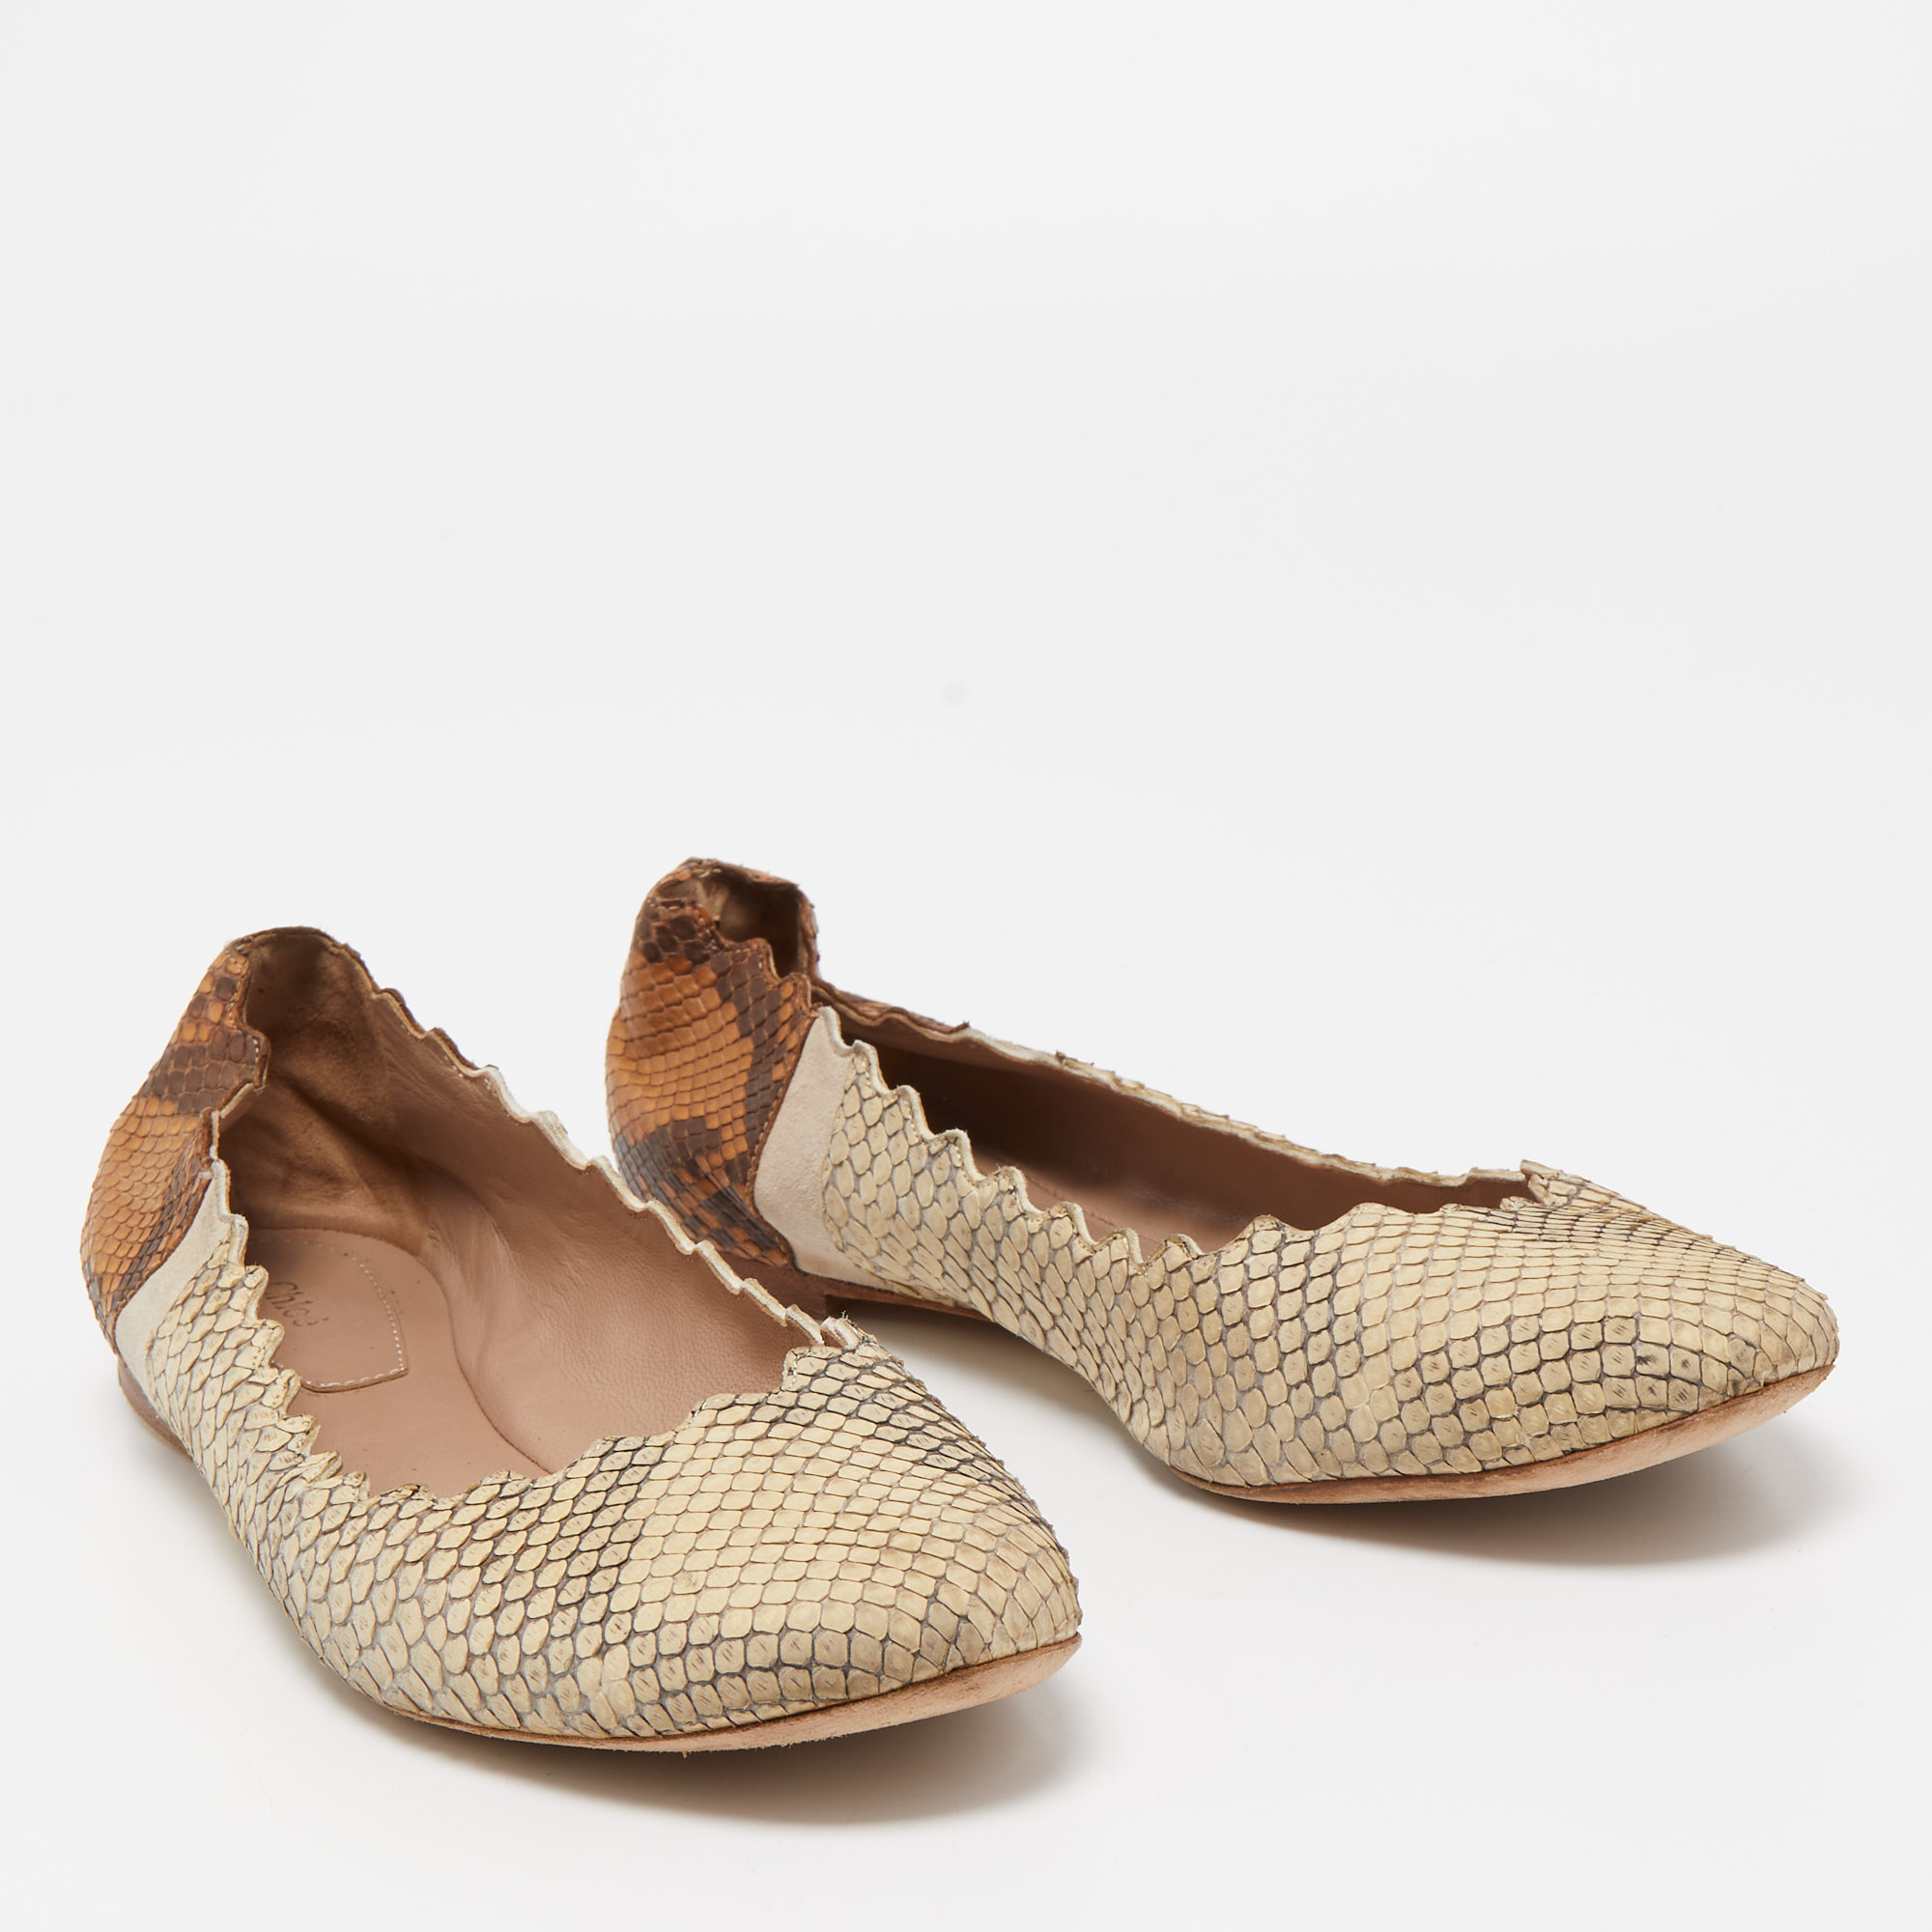 Chloe Cream/Brown Python Scalloped Accent Ballet Flats Size 38